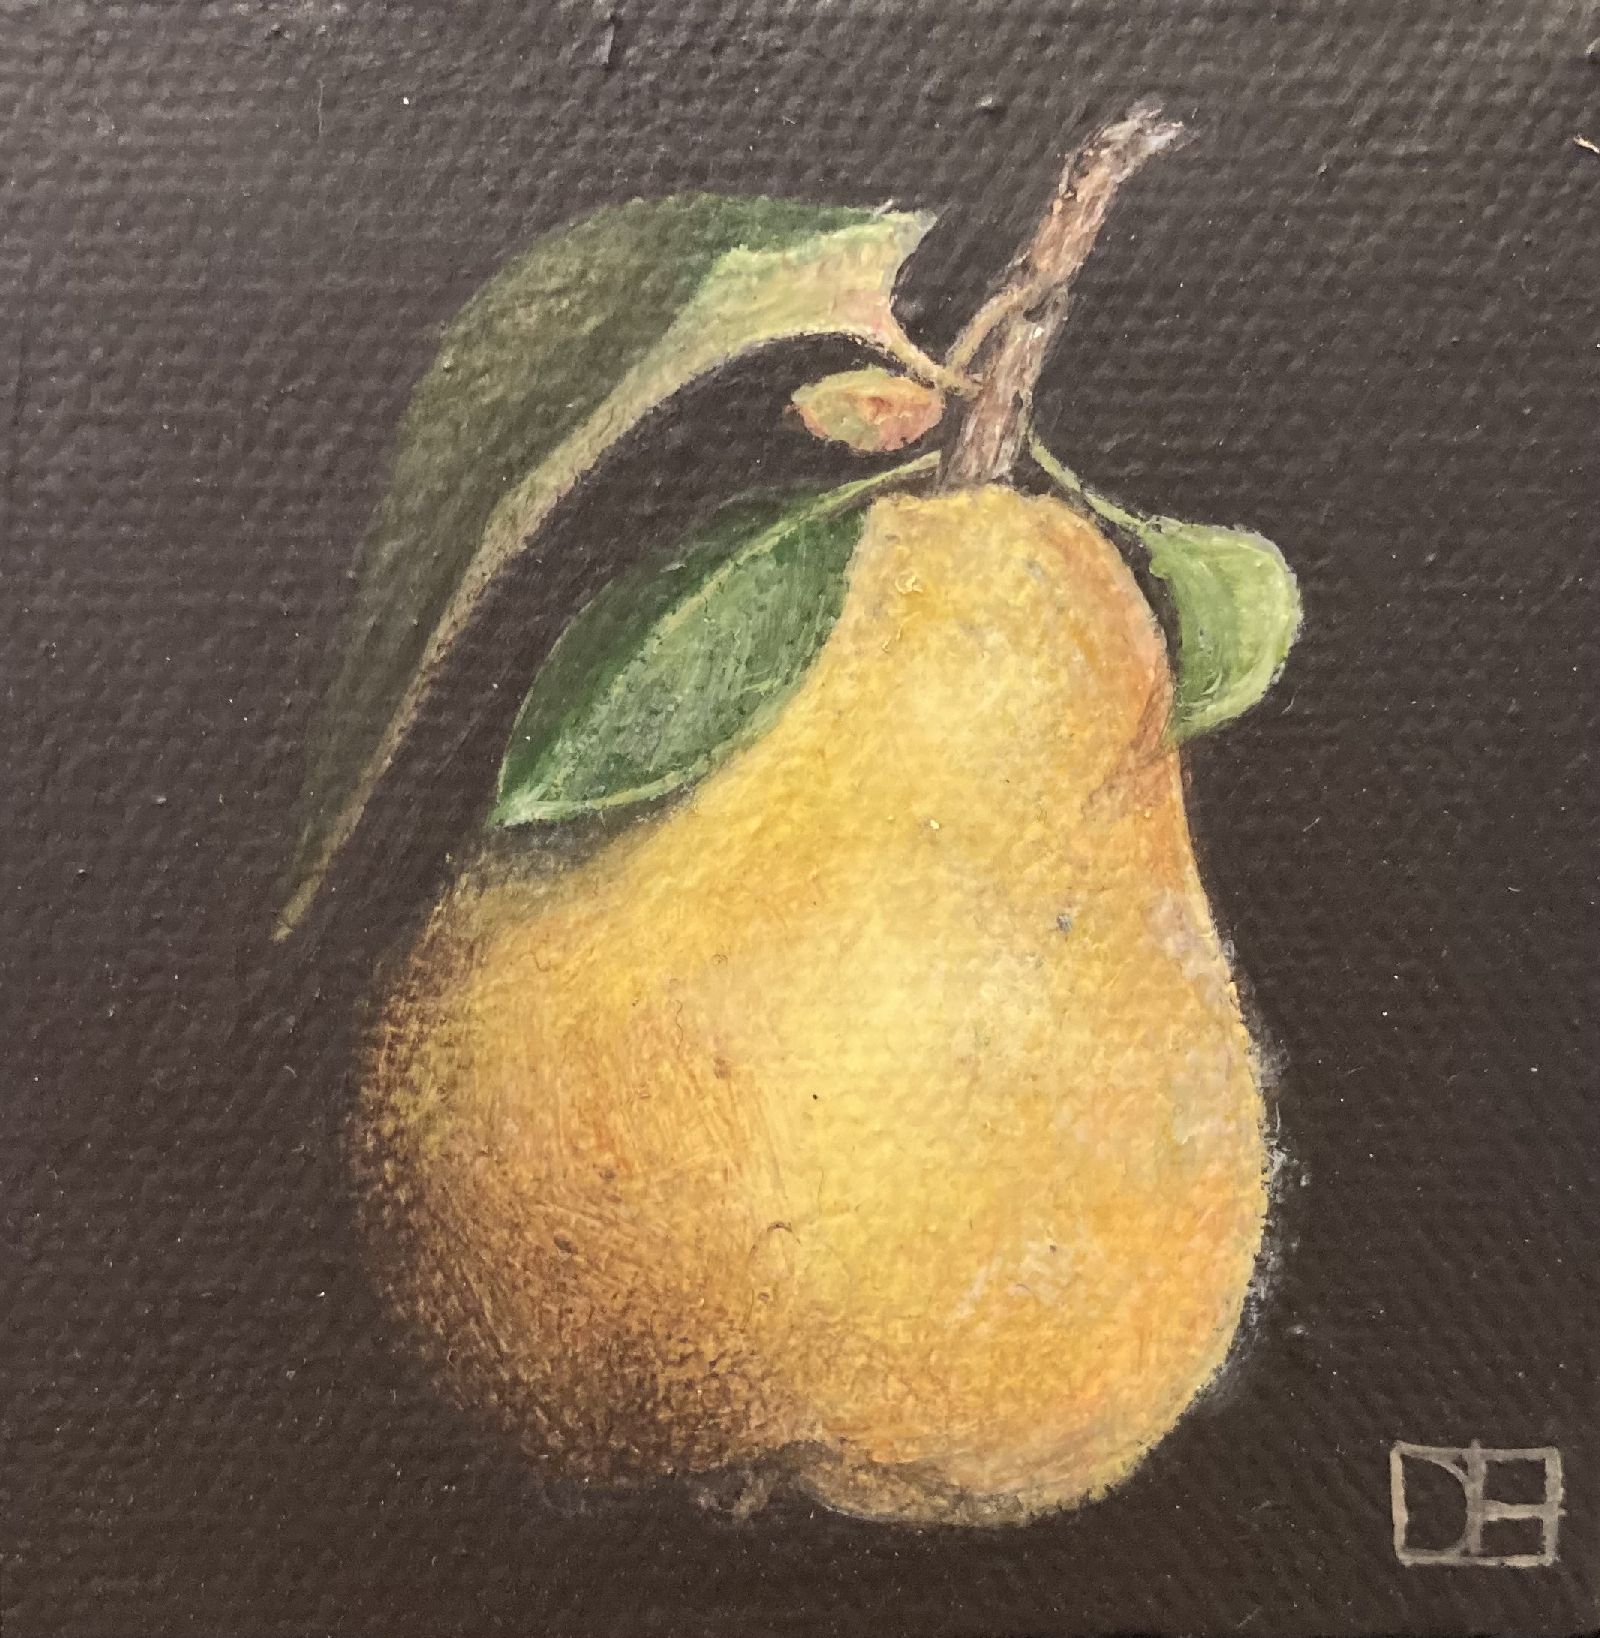 Dani Humberstone - Pocket yellow quince